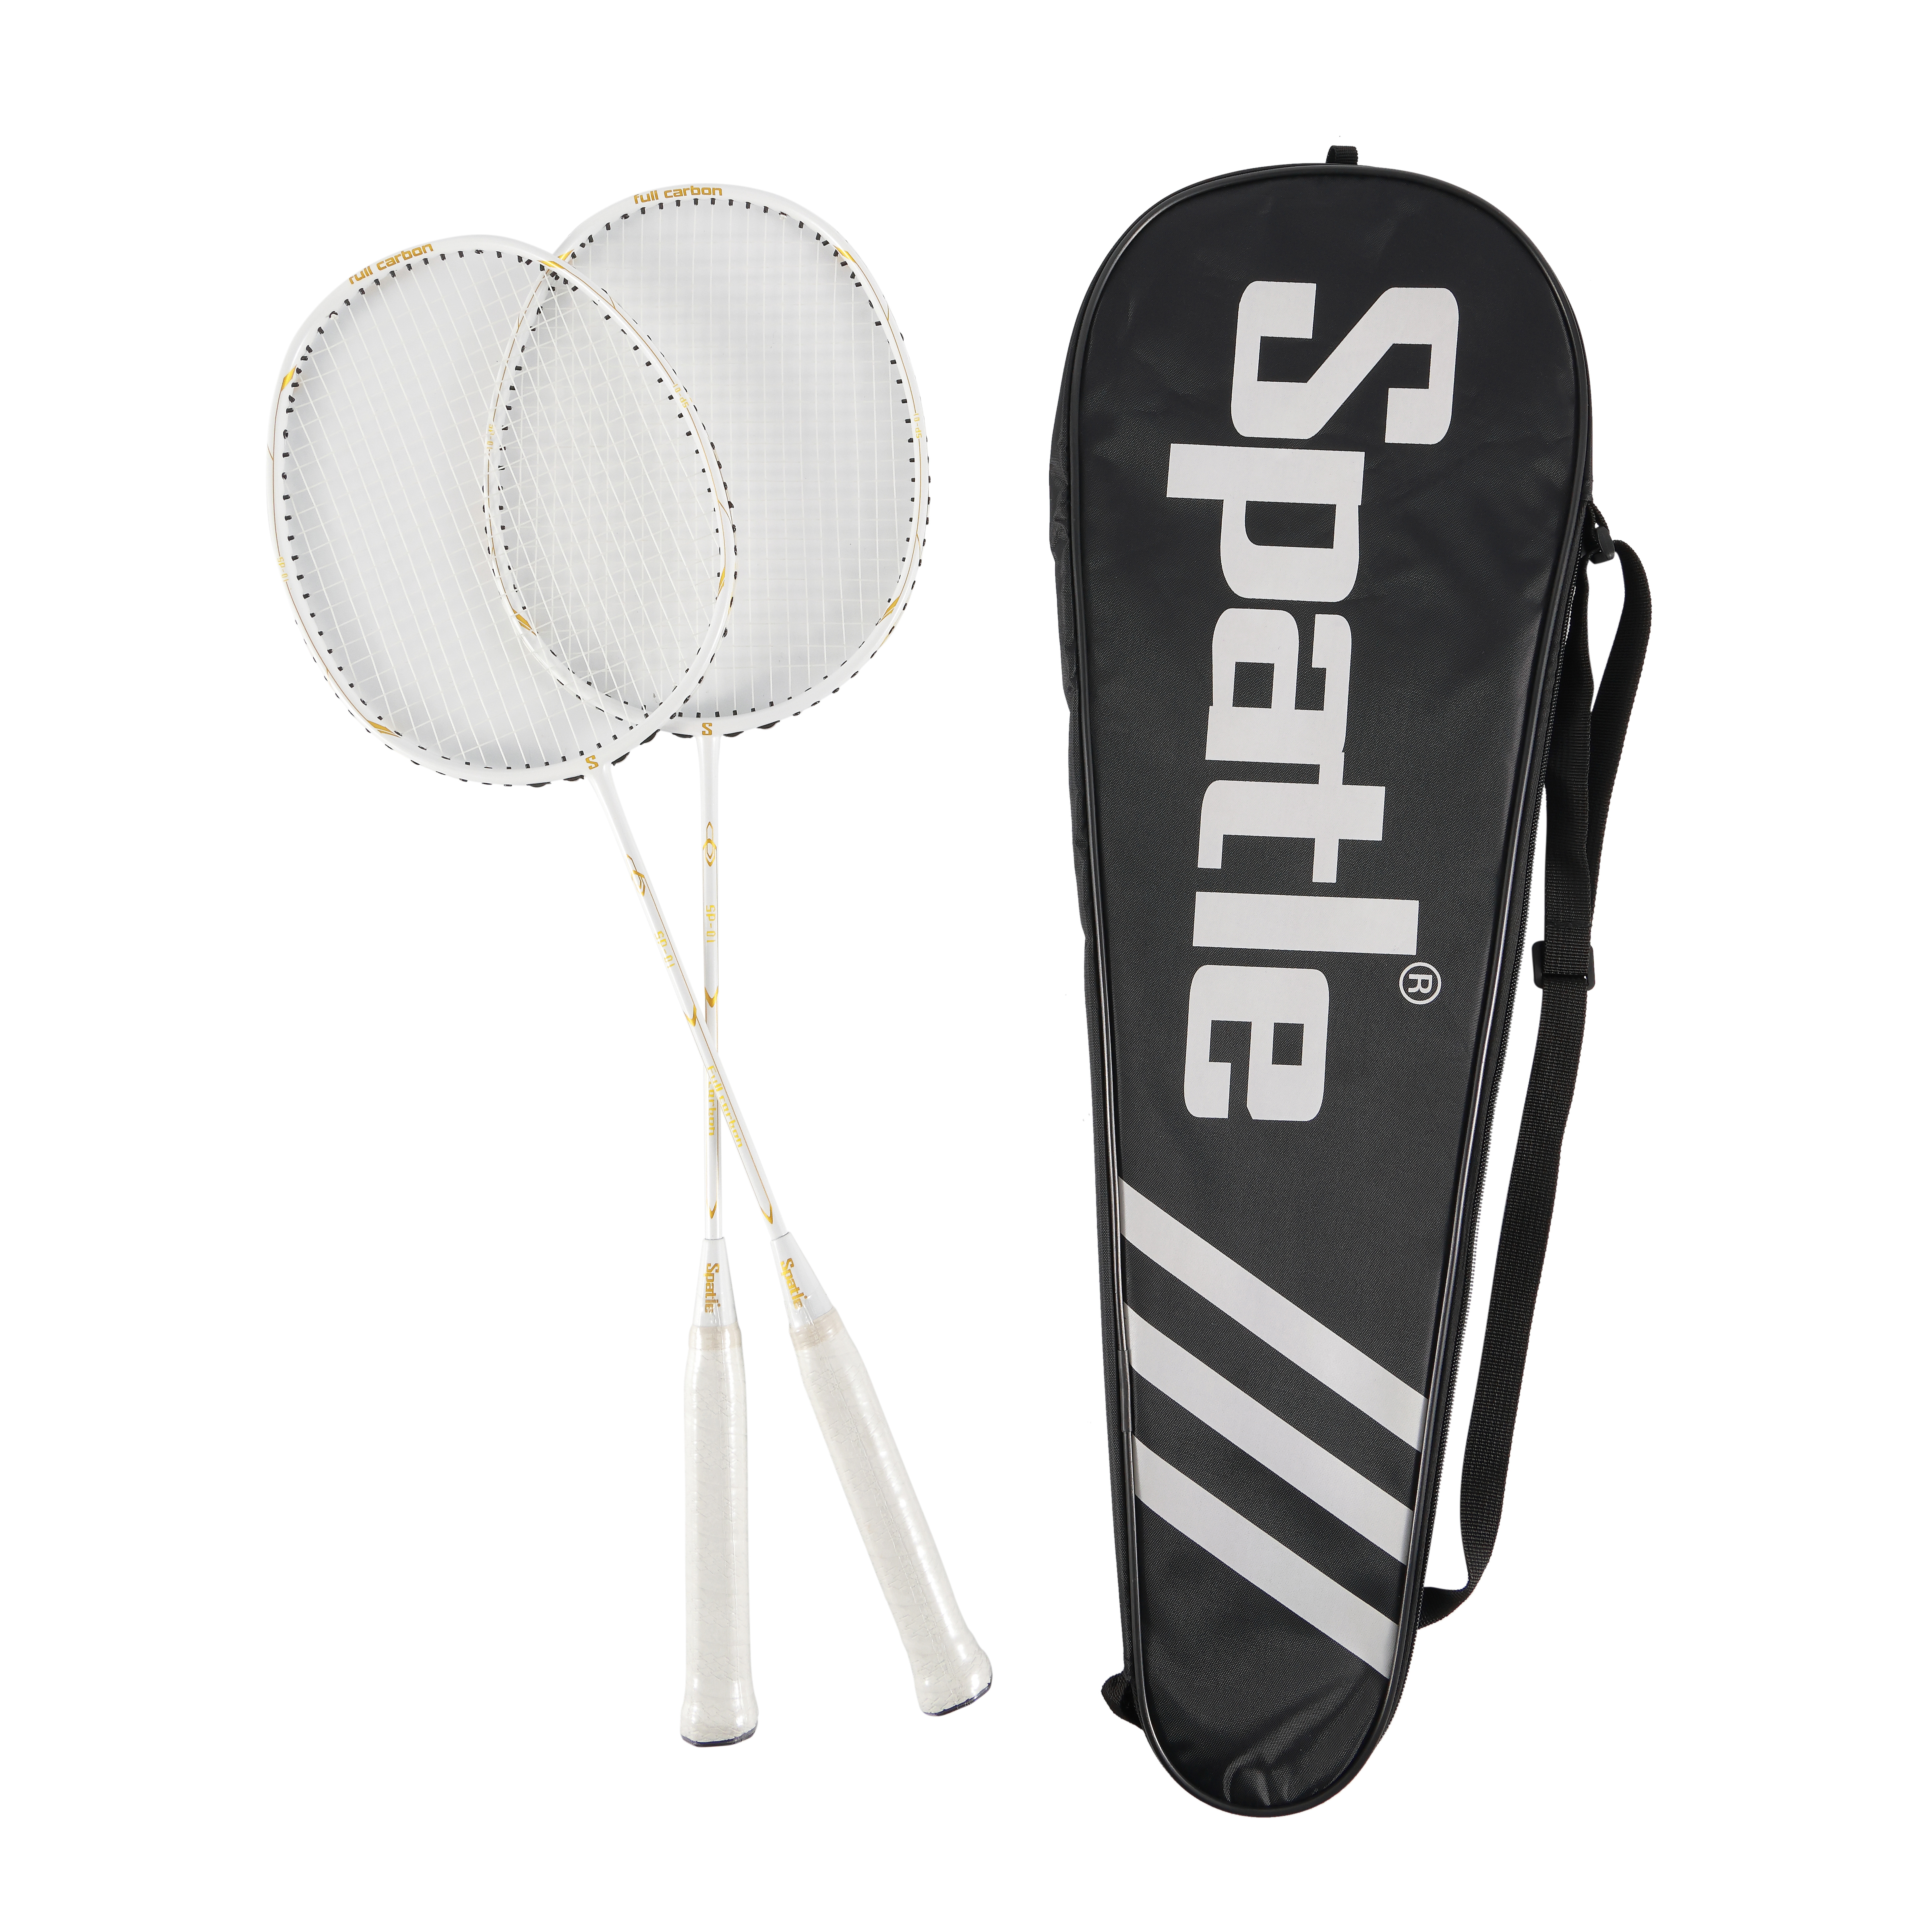 Carbon fiber High Quality OEM Wholesales Badminton Racket